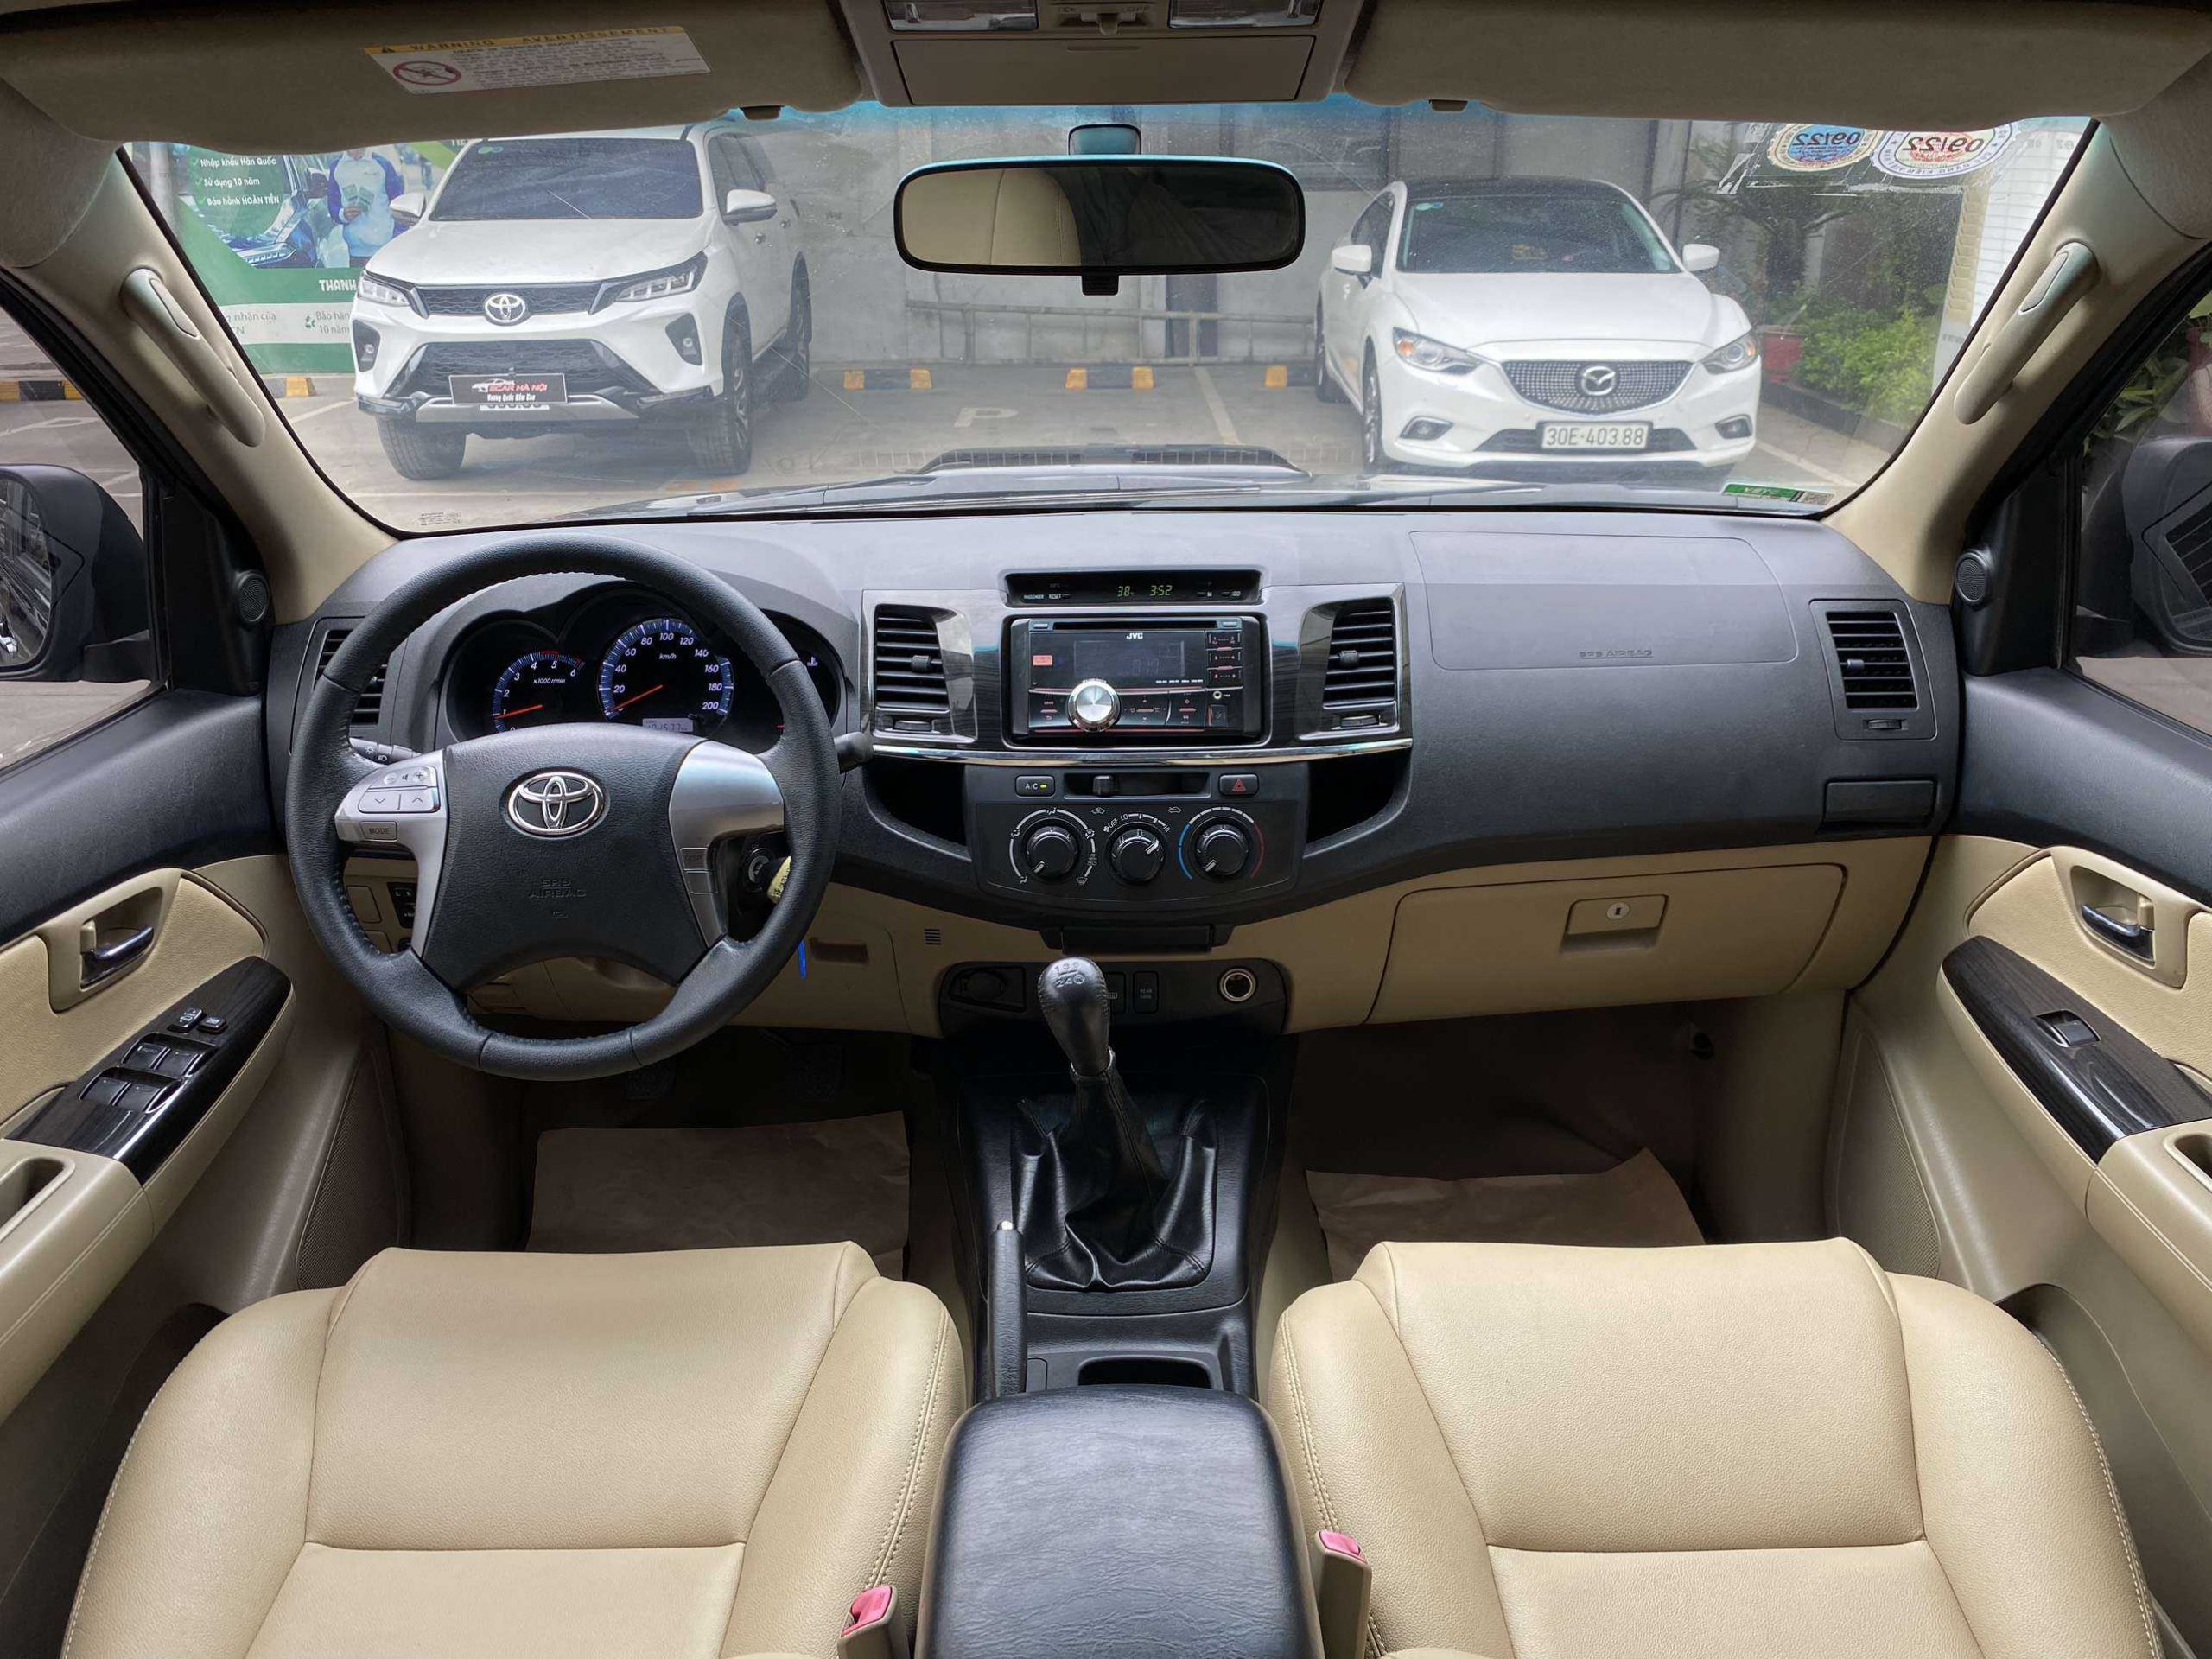 Toyota Fortuner 2015  mua bán xe Fortuner 2015 cũ giá rẻ 052023   Bonbanhcom